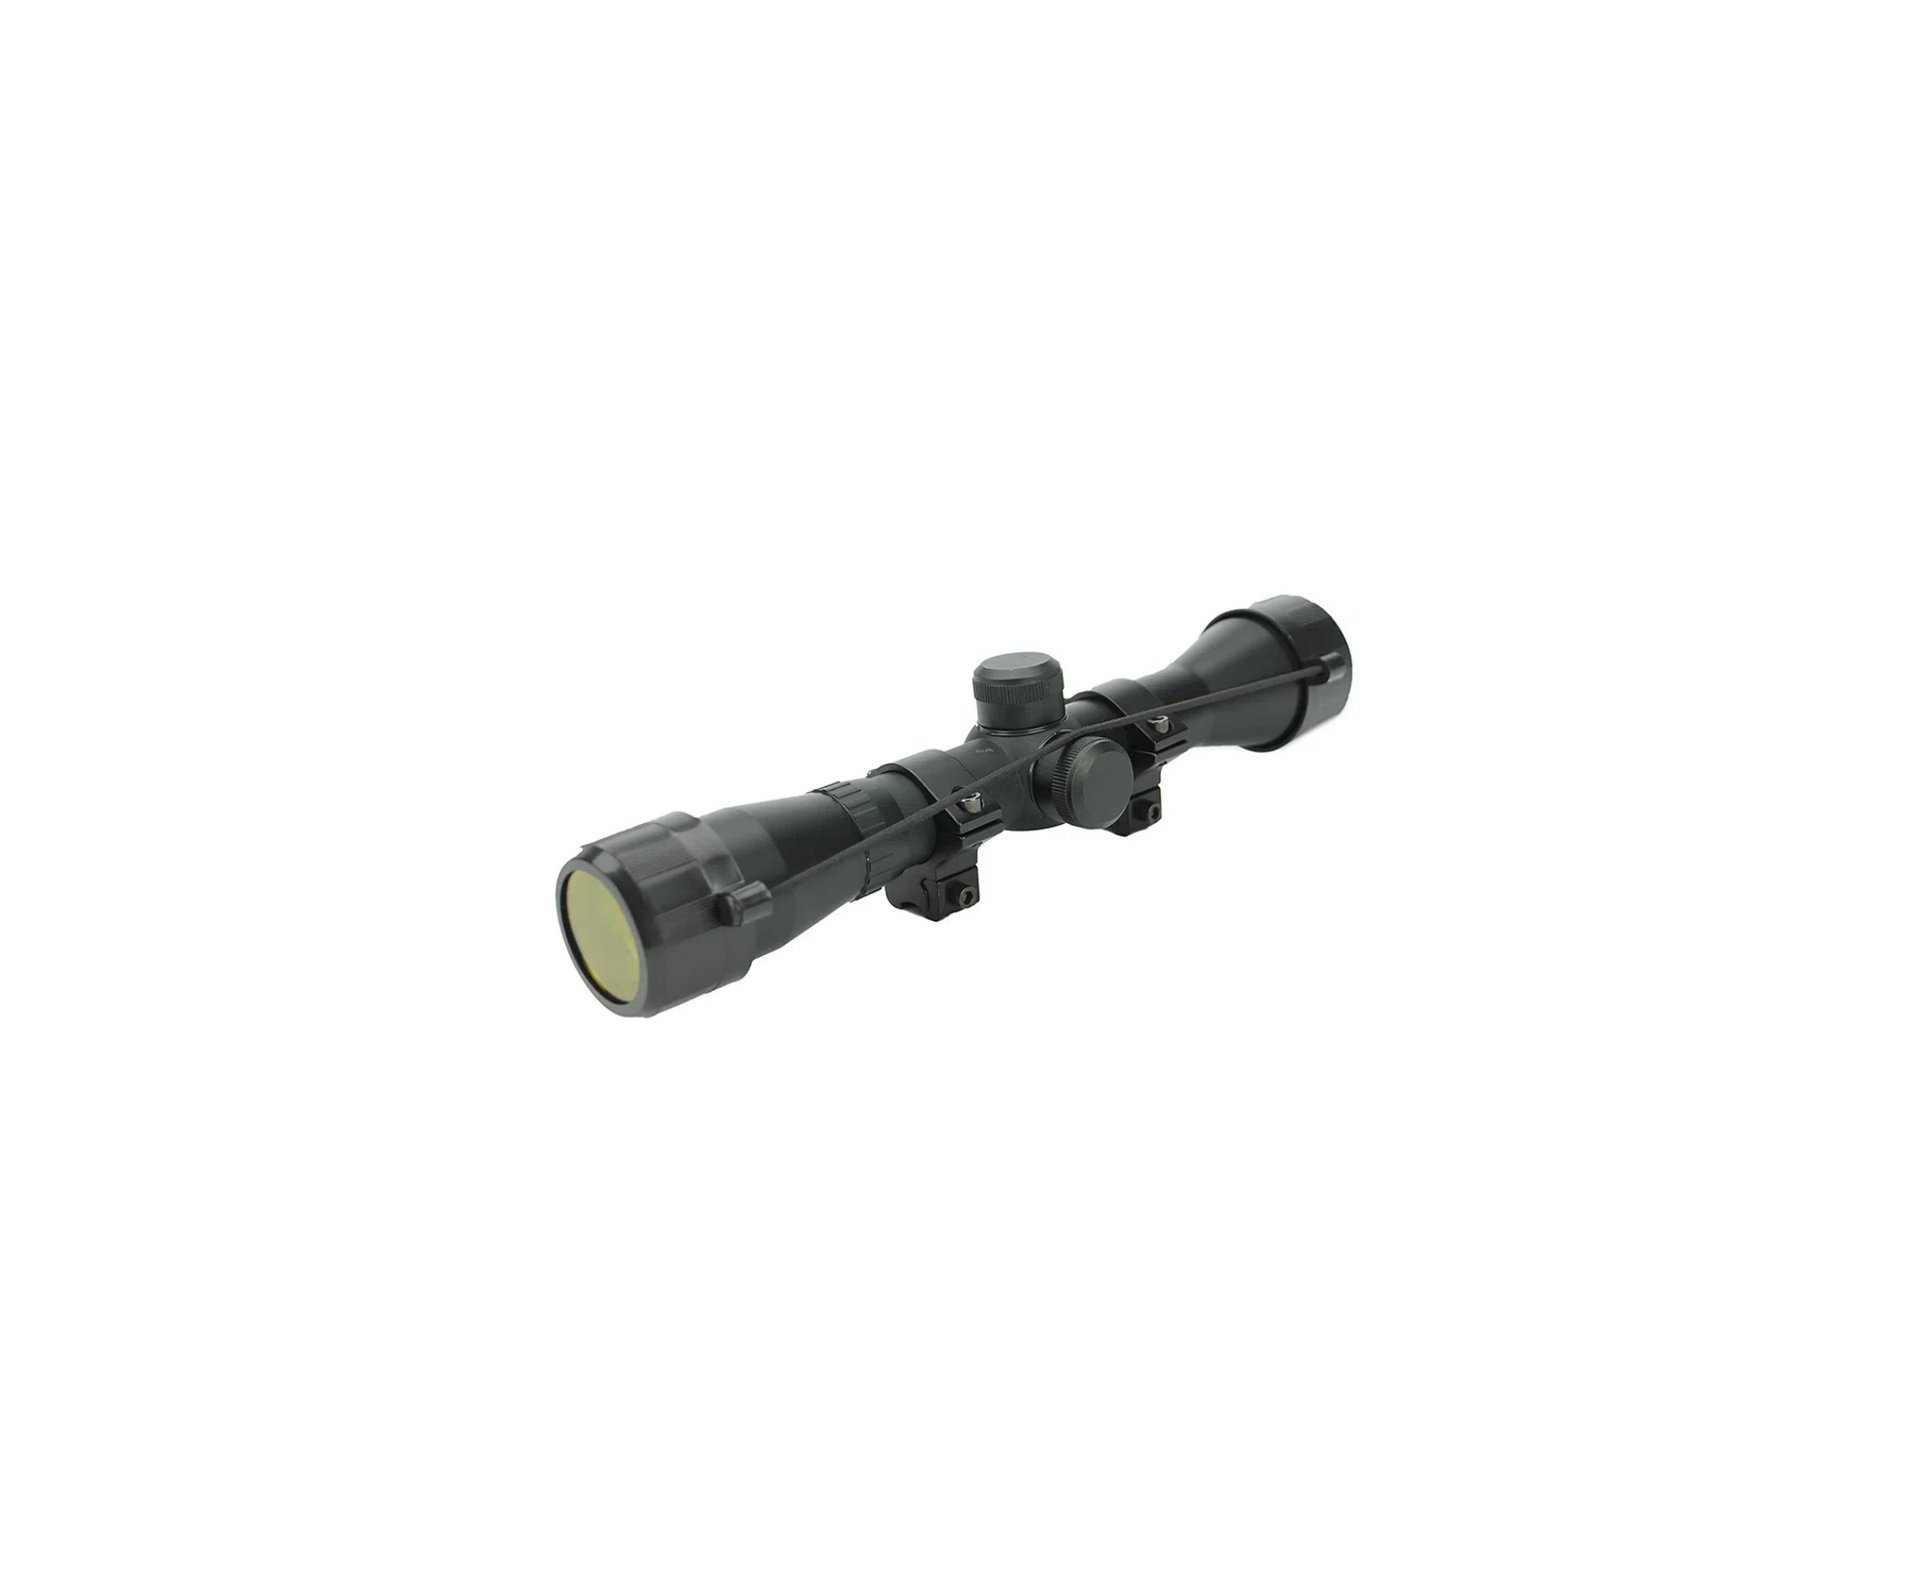 Carabina de Pressão TG-1 Match Gas Ram Nitro 4,5mm - TAG + Luneta 4x32 + Capa